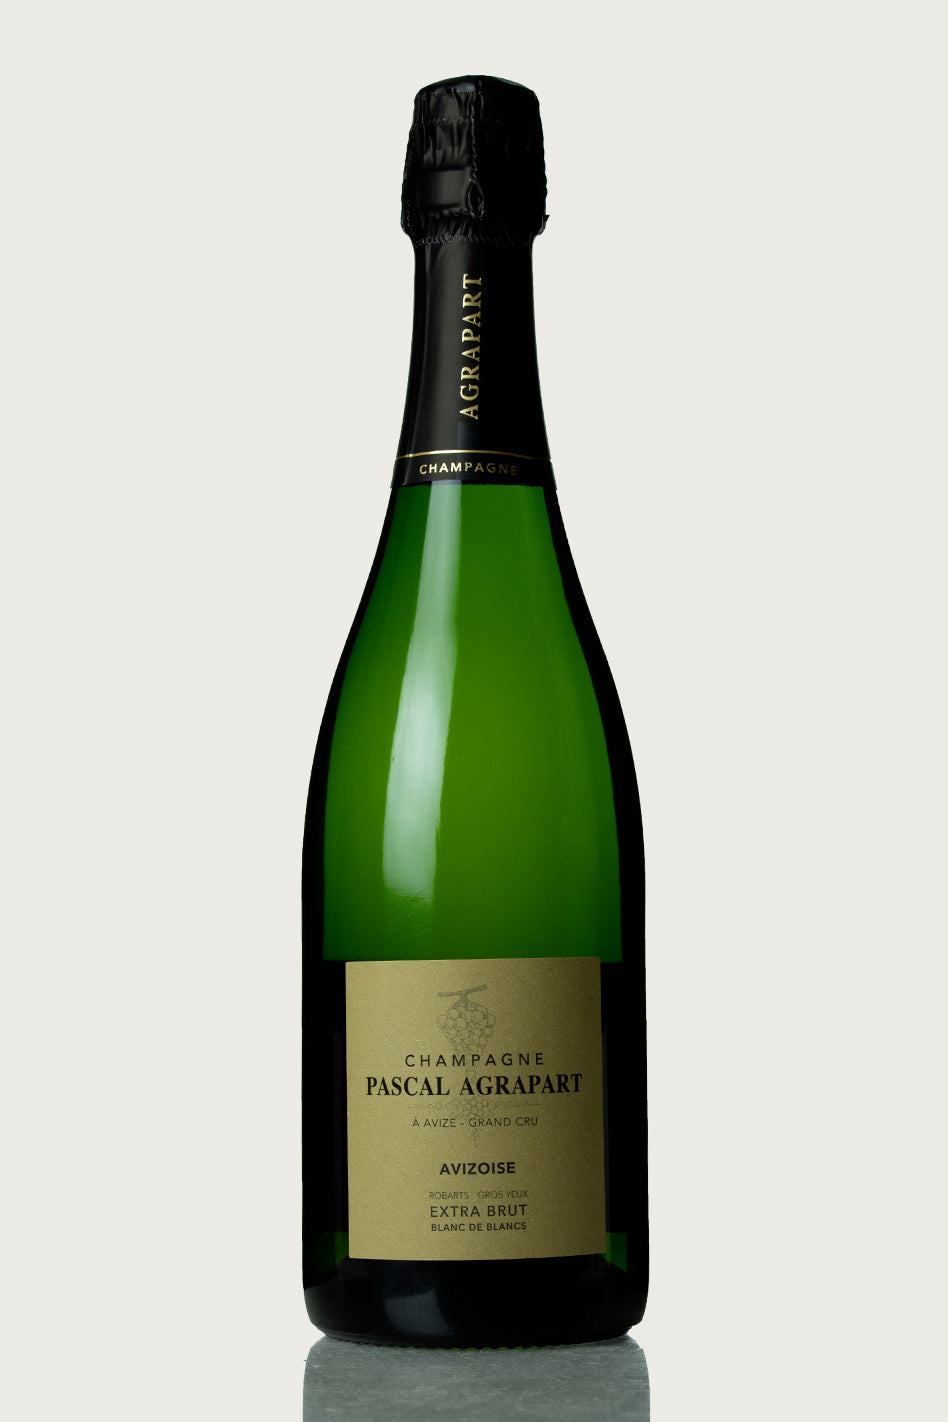 Agrapart Champagne Grand Cru 'Avizoise' 2016